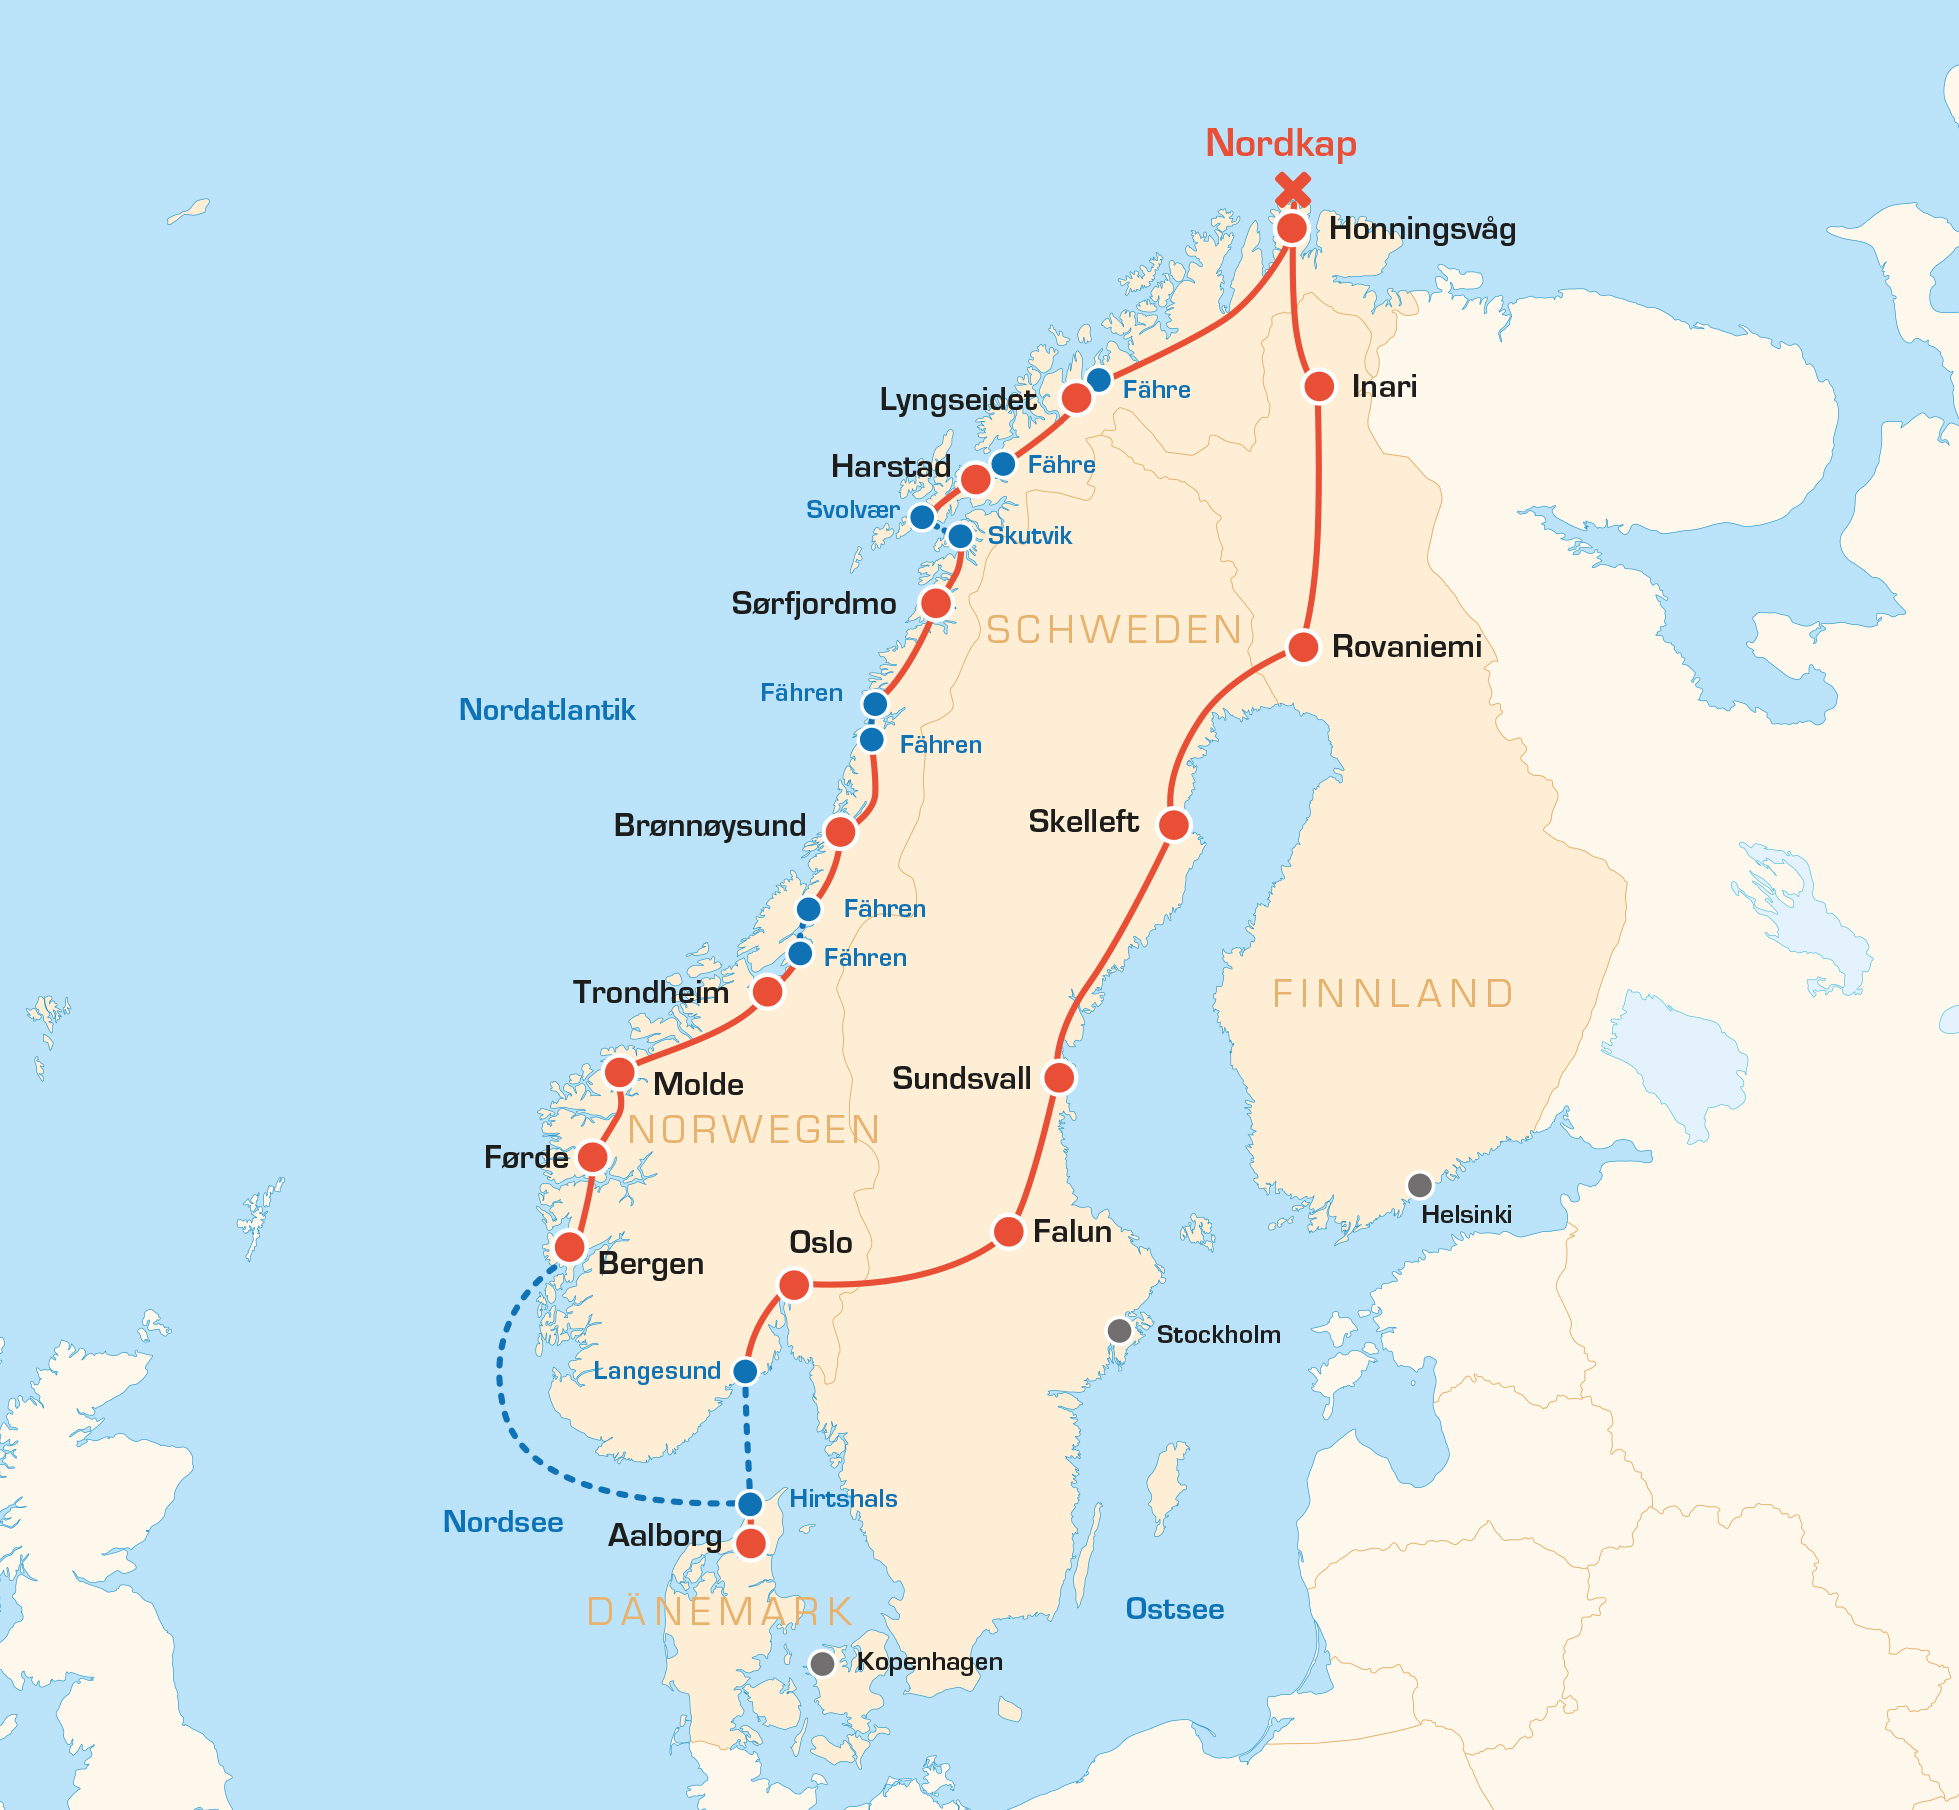 Nordkap Motorradtour mit Best City Travel, Motorradtour Nordkap